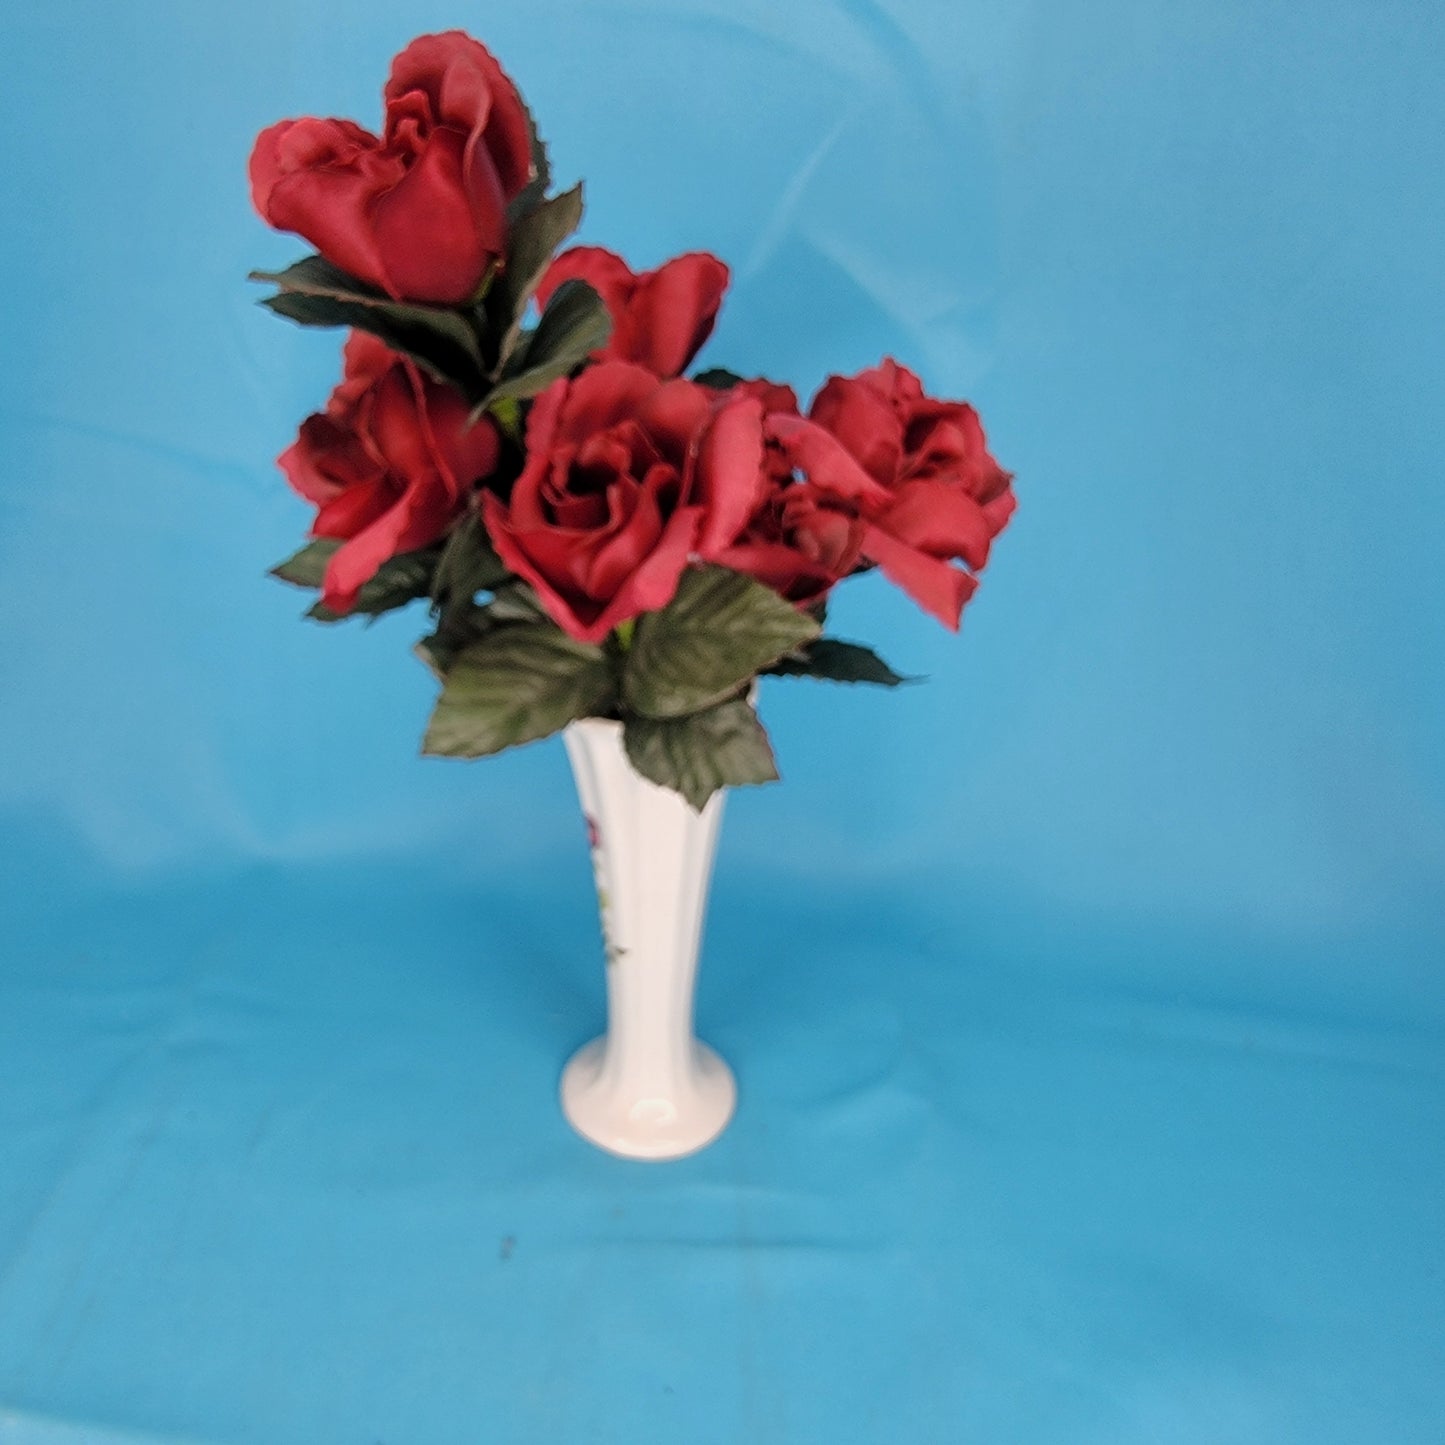 Porcelain Flower Vase with Faux Roses